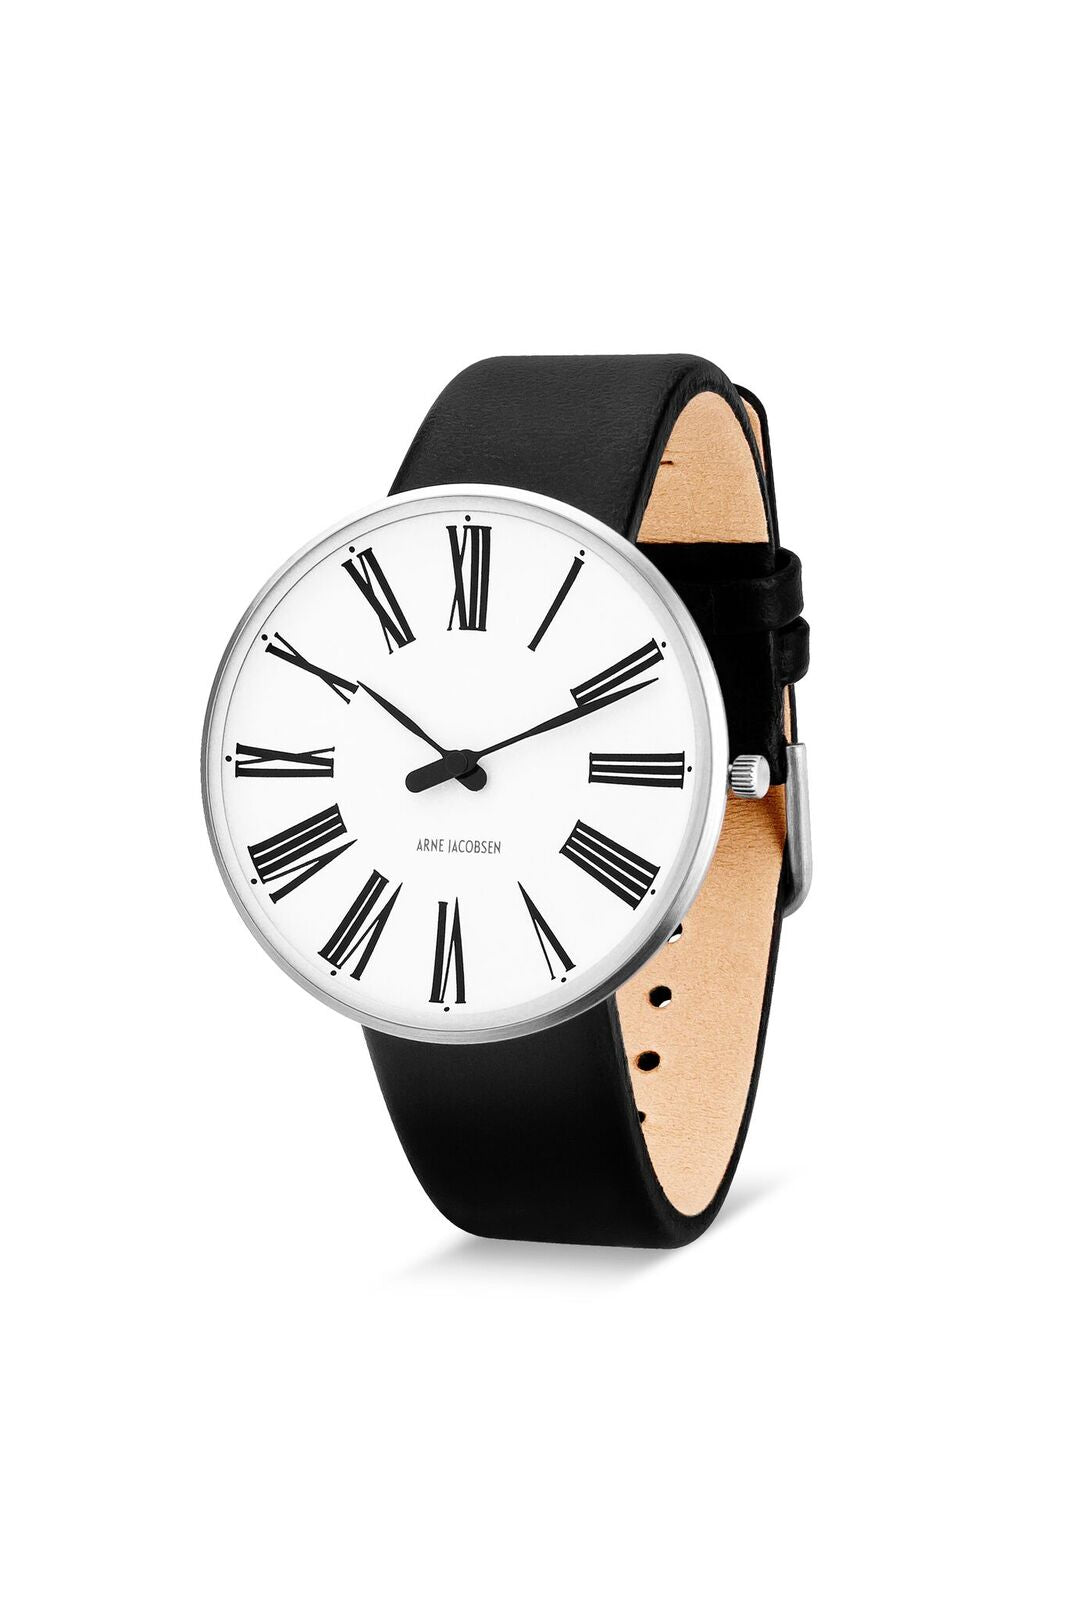 Arne Jacobsen 40mm Wrist Watch Roman